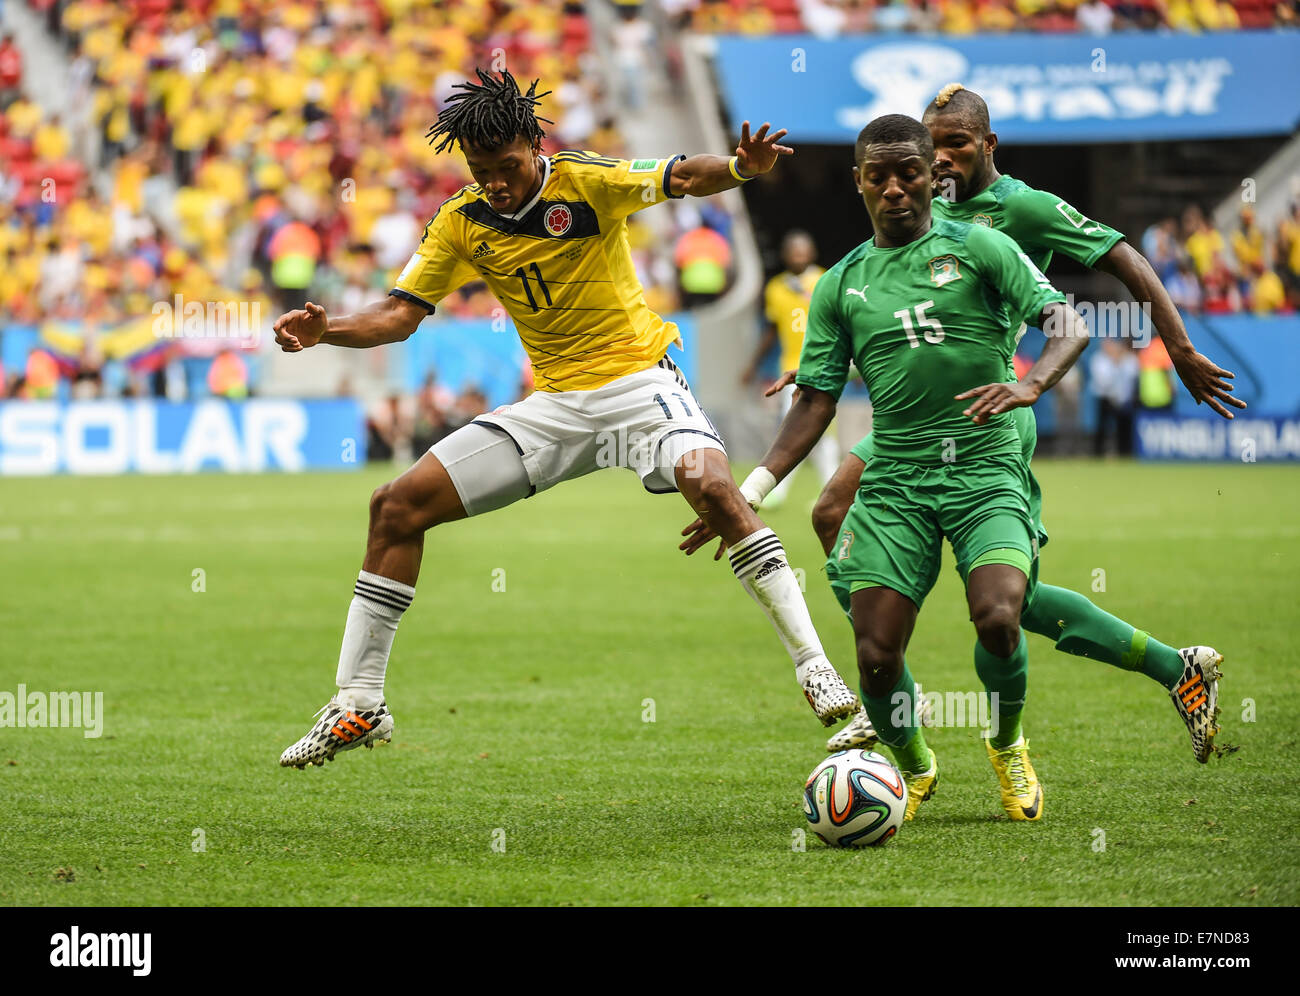 Juan Cuadrado and Max Gradel. Colombia v Ivory Coast. Group match. FIFA World Cup 2014 Brazil. National stadium, Brasilia. 19 Ju Stock Photo